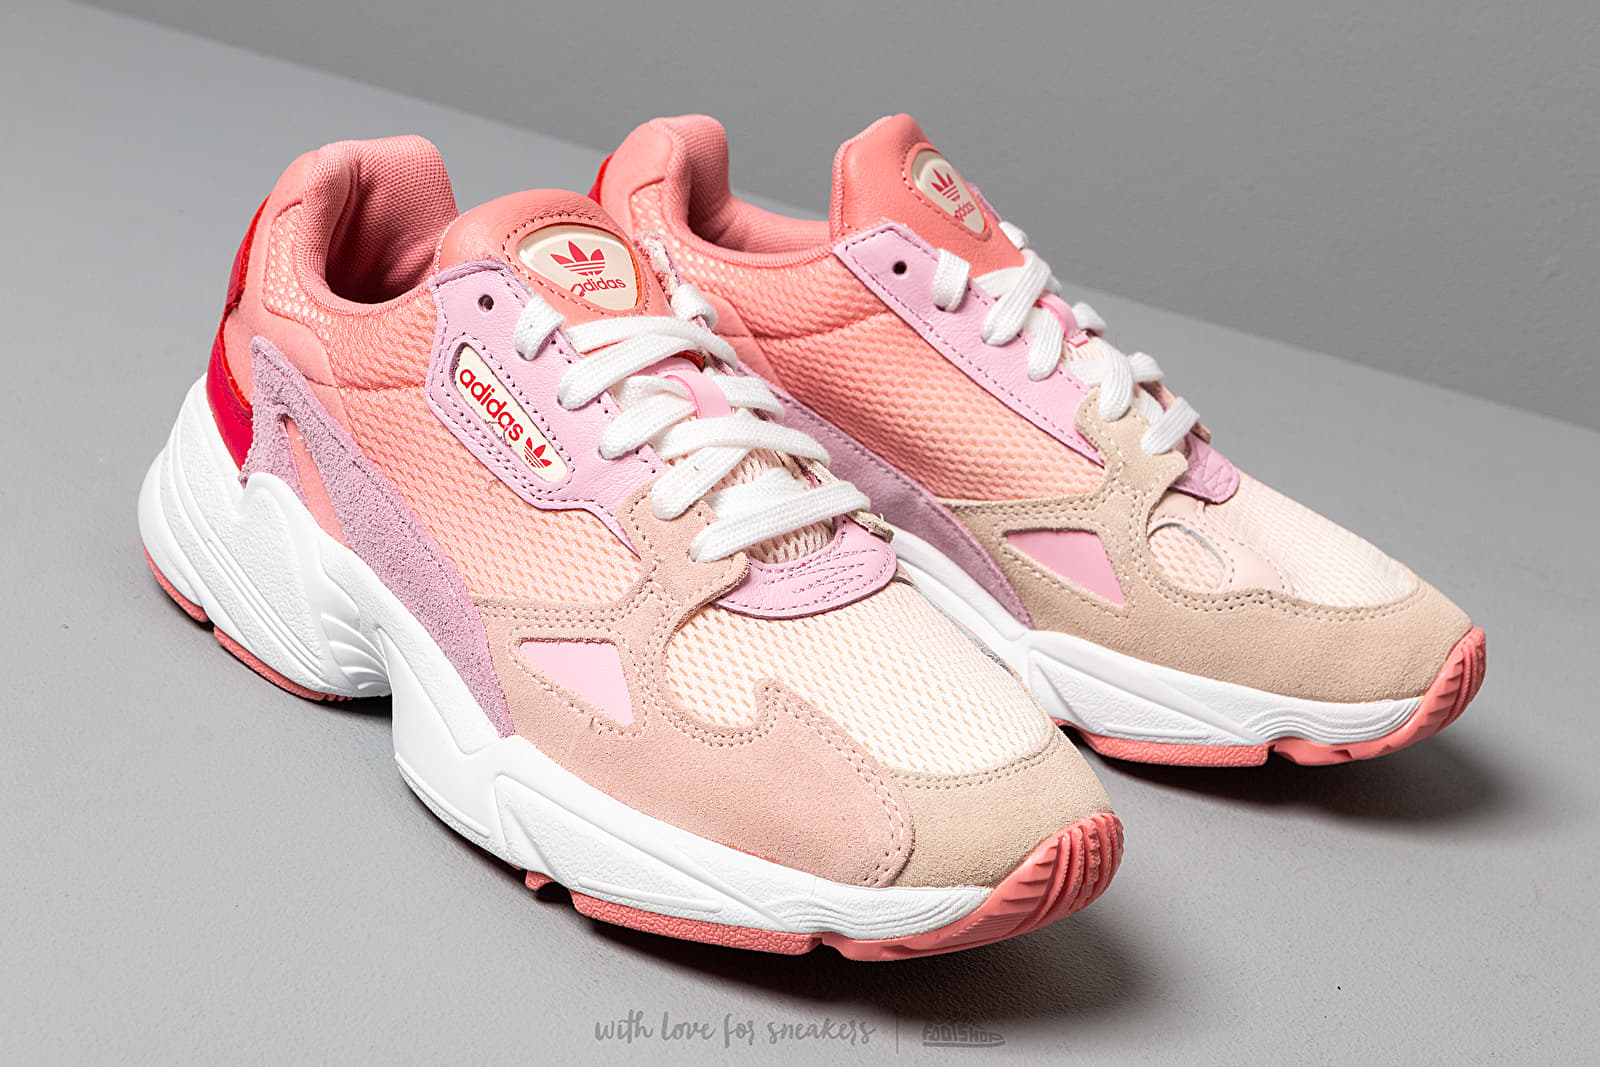 Chaussures et baskets femme adidas Falcon W Ecru Tint/ Ice Pink/ True Pink  | Footshop